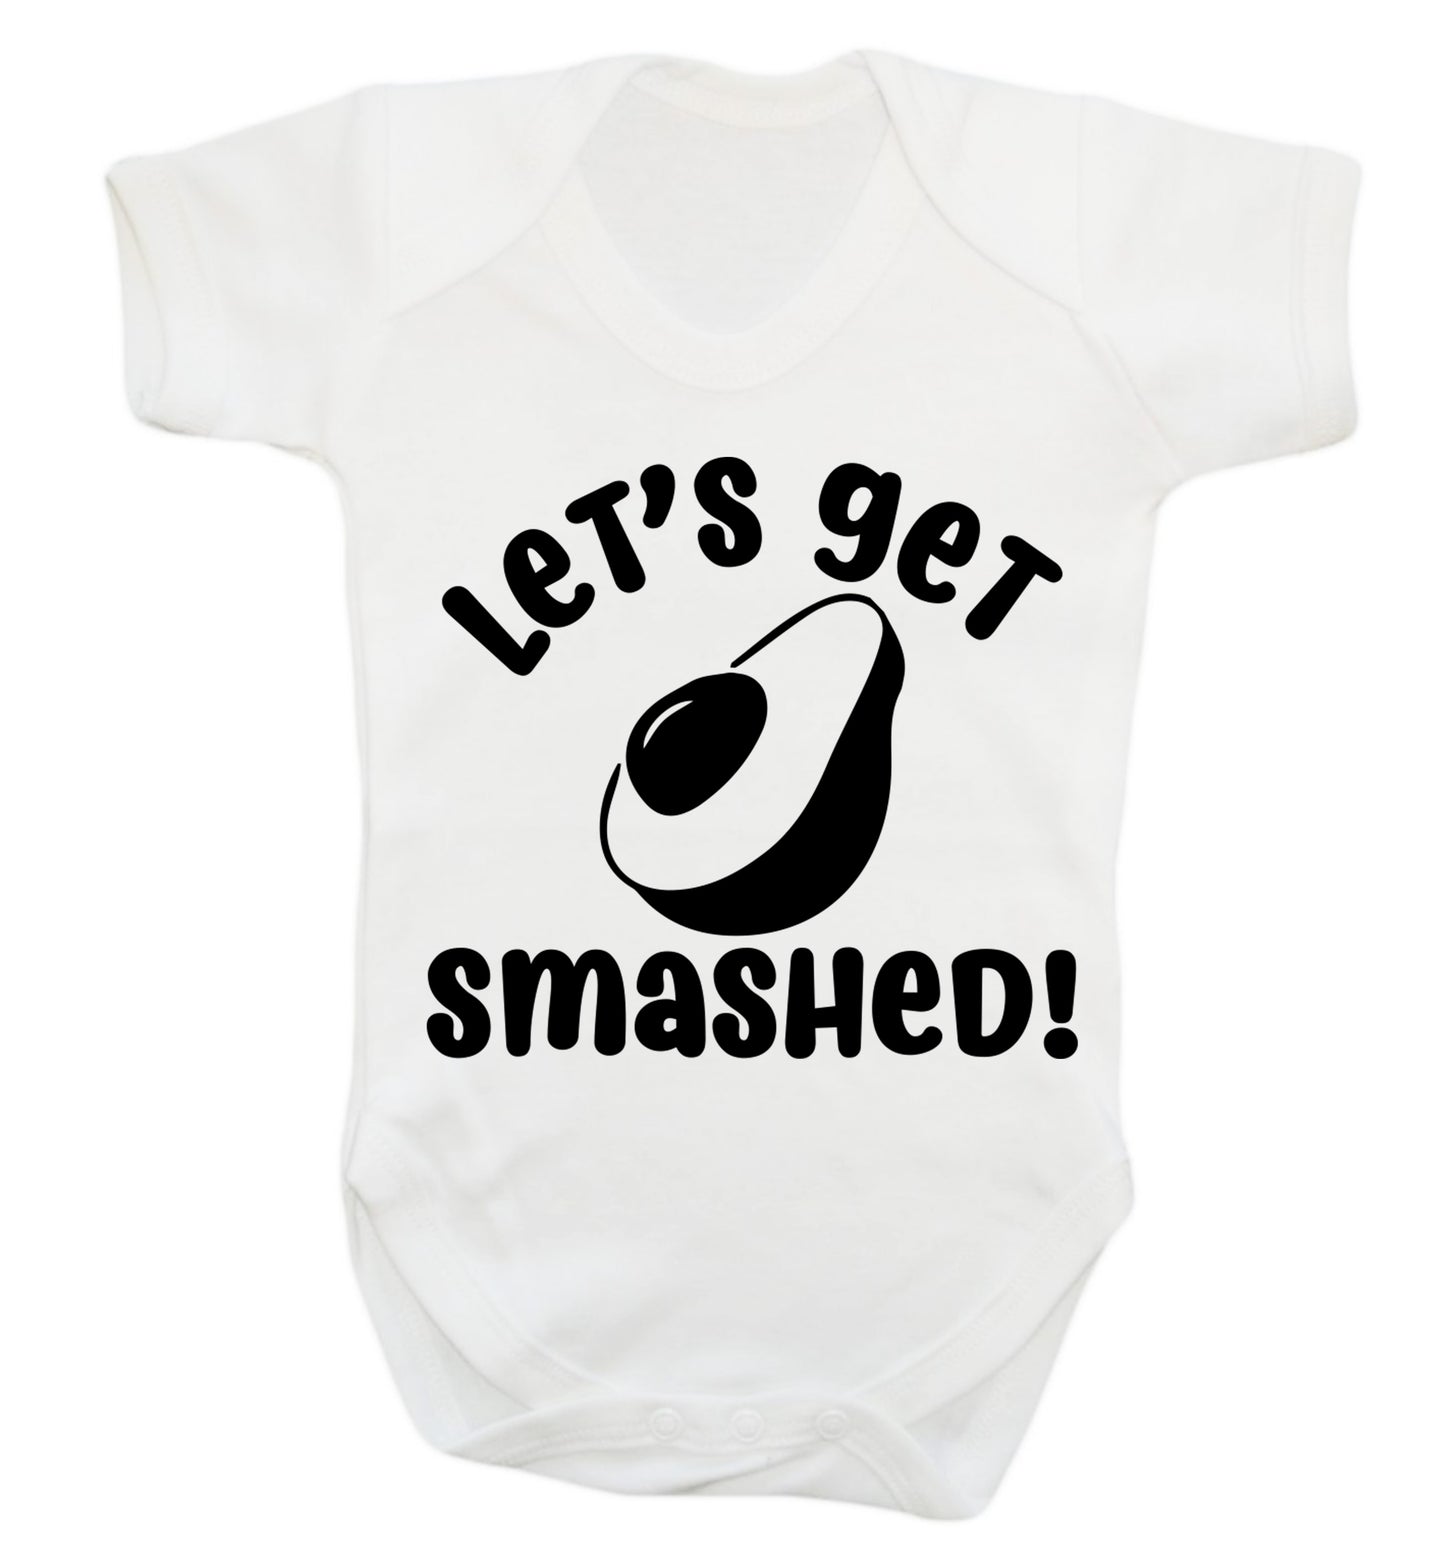 Let's get smashed Baby Vest white 18-24 months